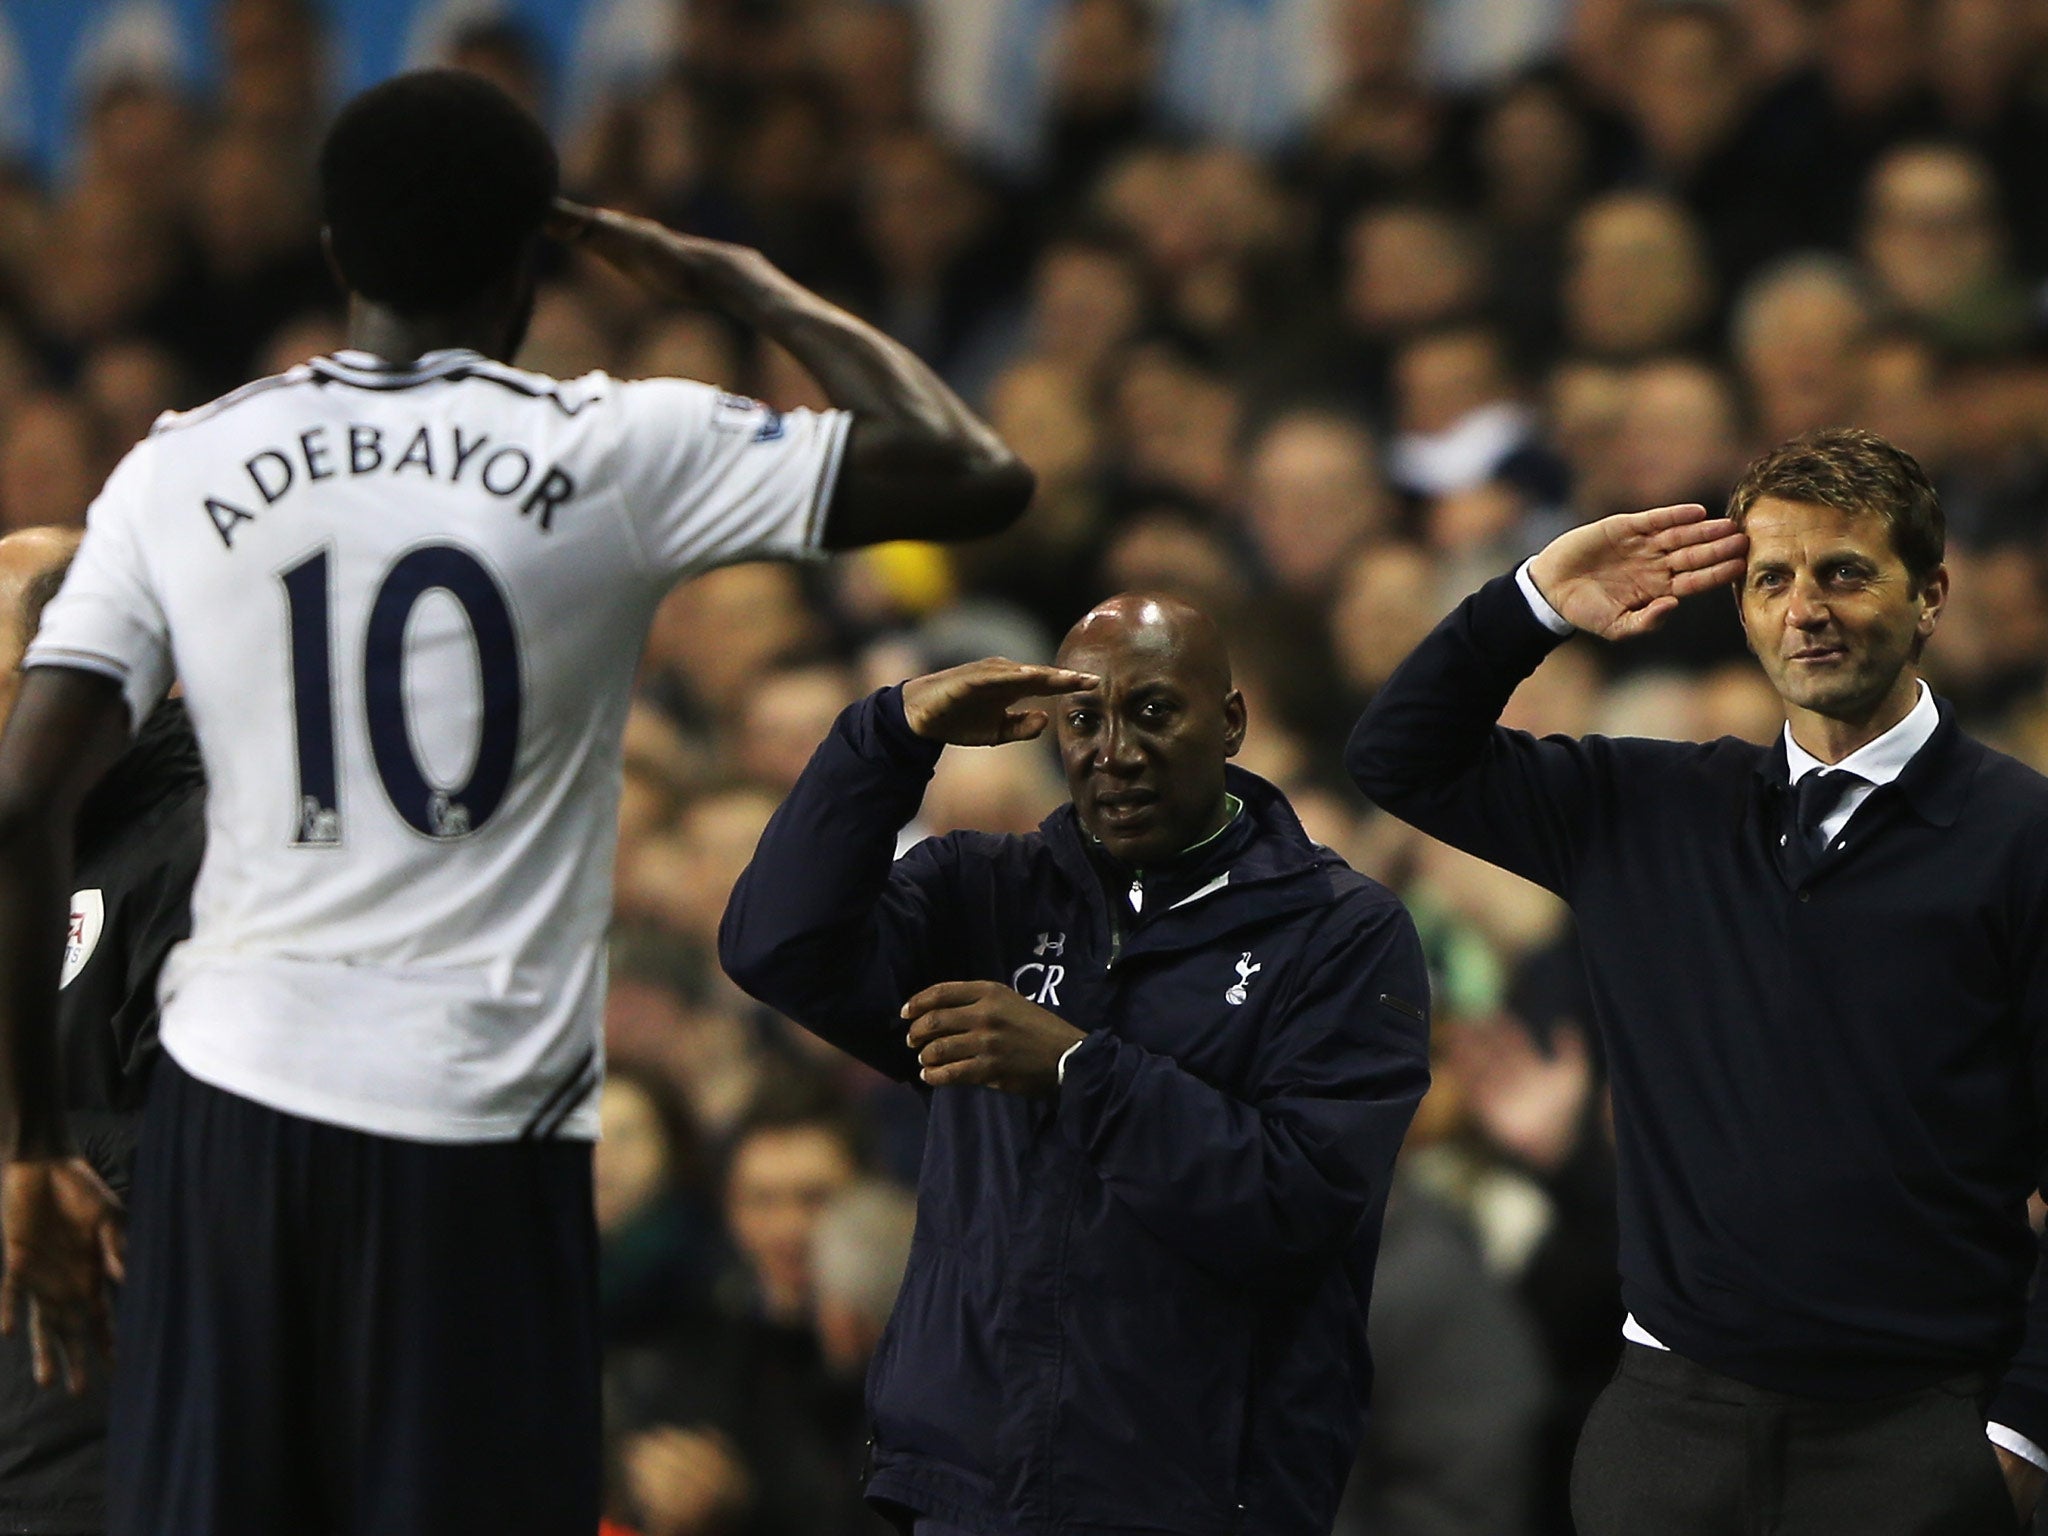 Emmanuel Adebayor of Tottenham Hotspur celebrates scoring his second goal against Sunderland by saluting manager Tim Sherwood this week